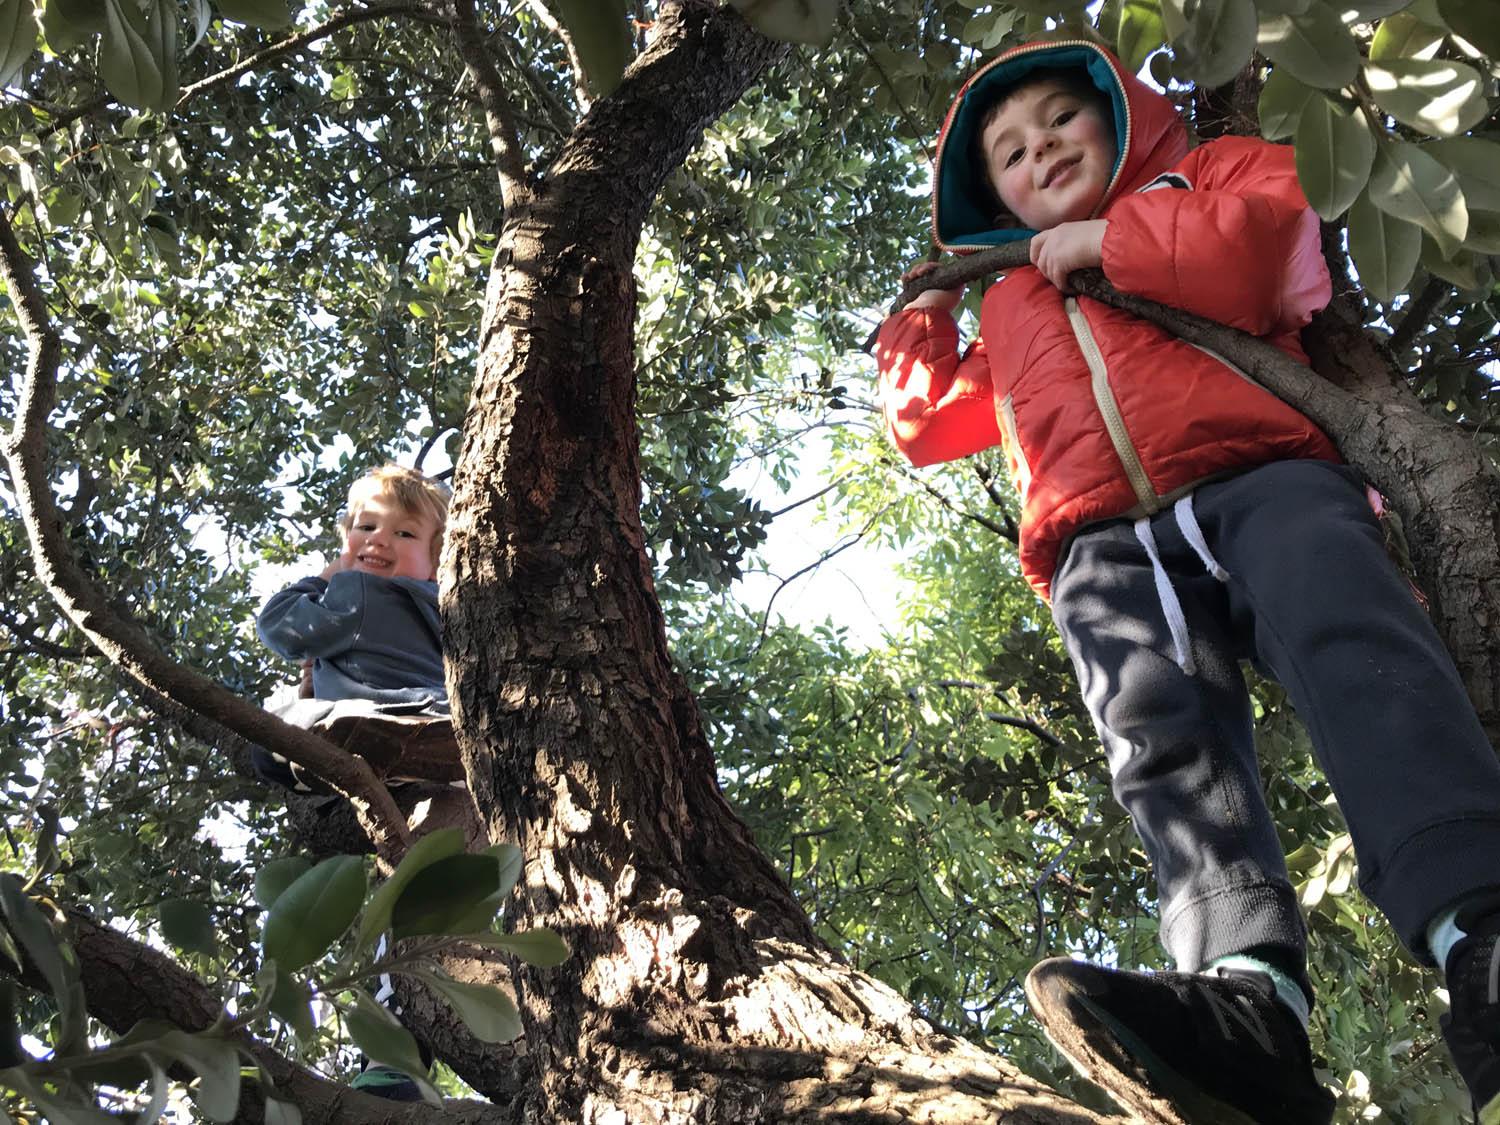 Kids in trees